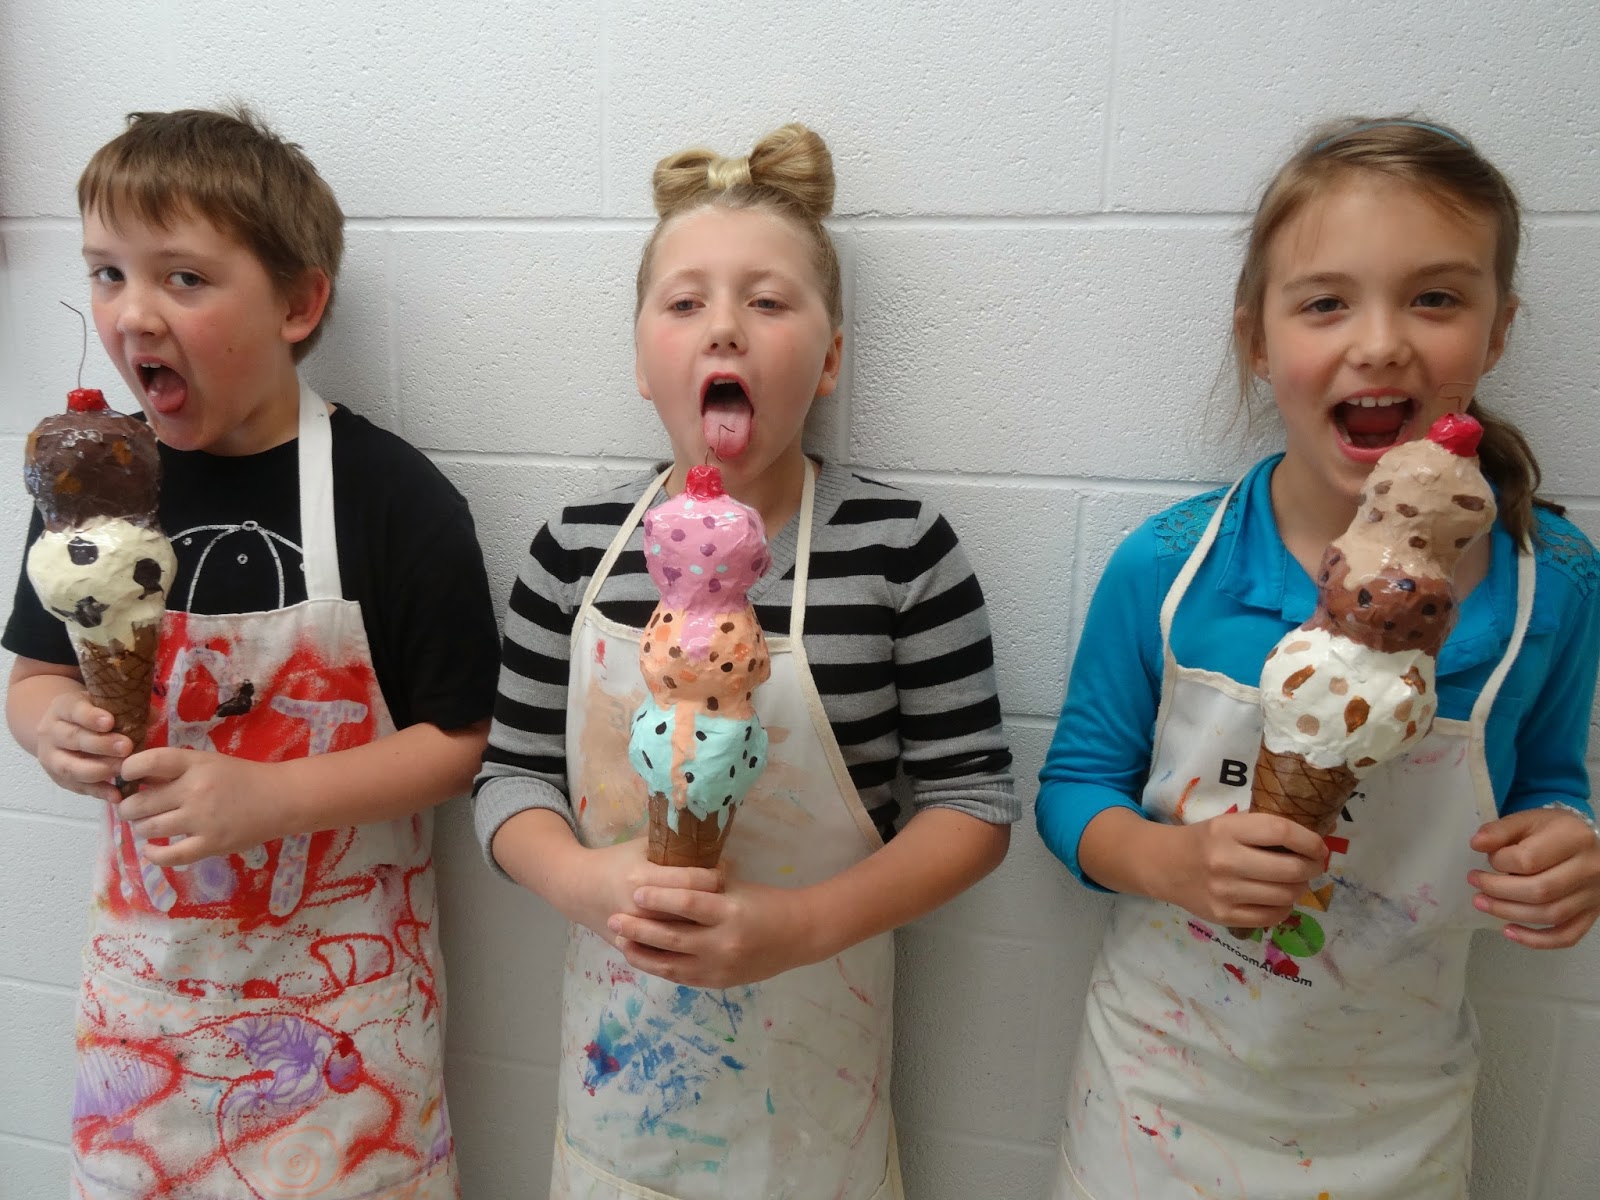 Ice Cream Maker Ball: How To Make Ice Cream At Camp